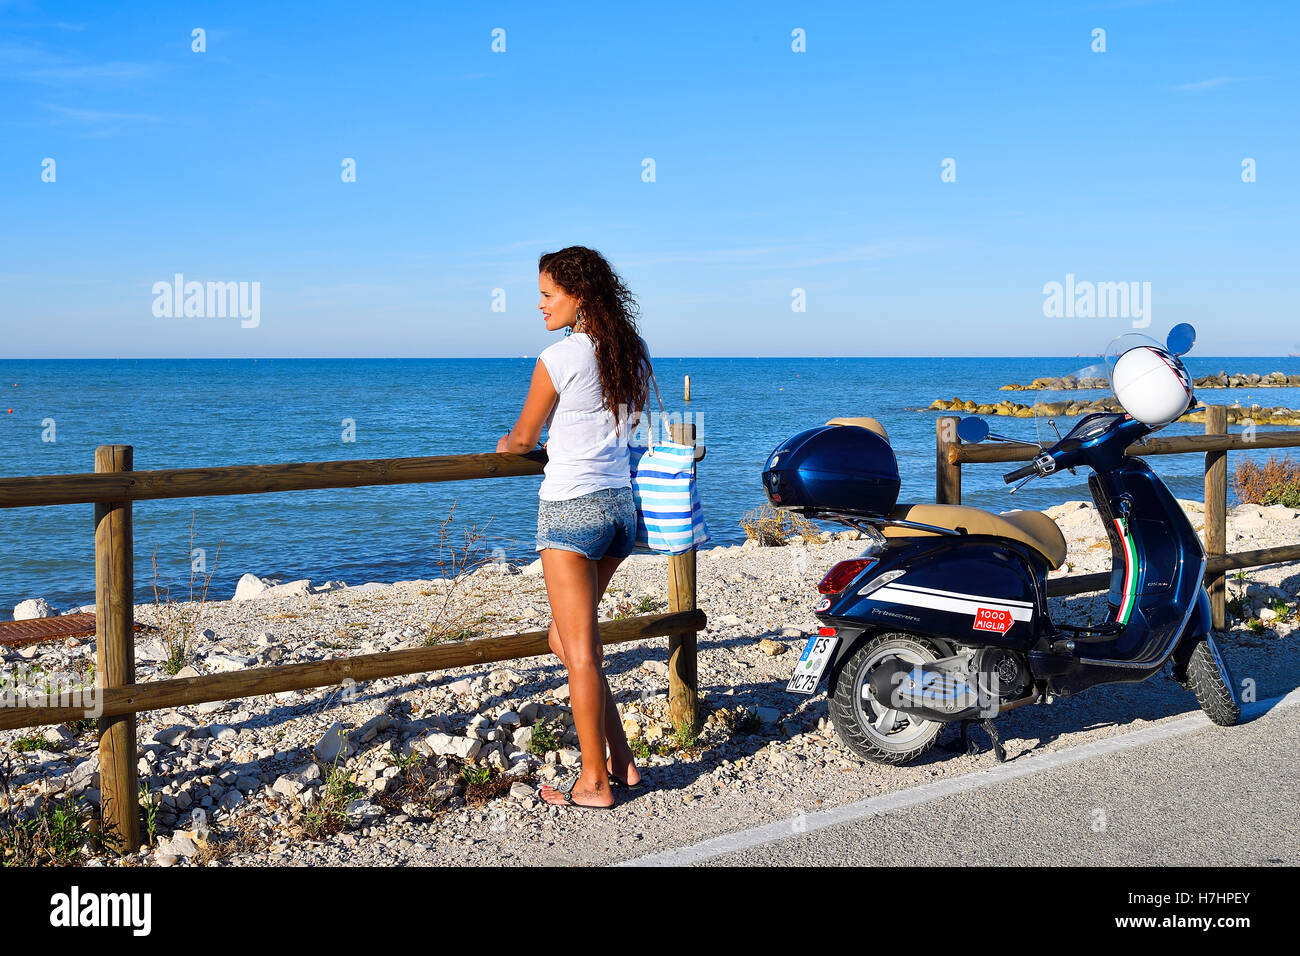 Frau blicken heraus am Meer neben Vespa Primavera Roller, Marina di Montemarciano, Indisch, Alaska Marche, Italien Stockfoto